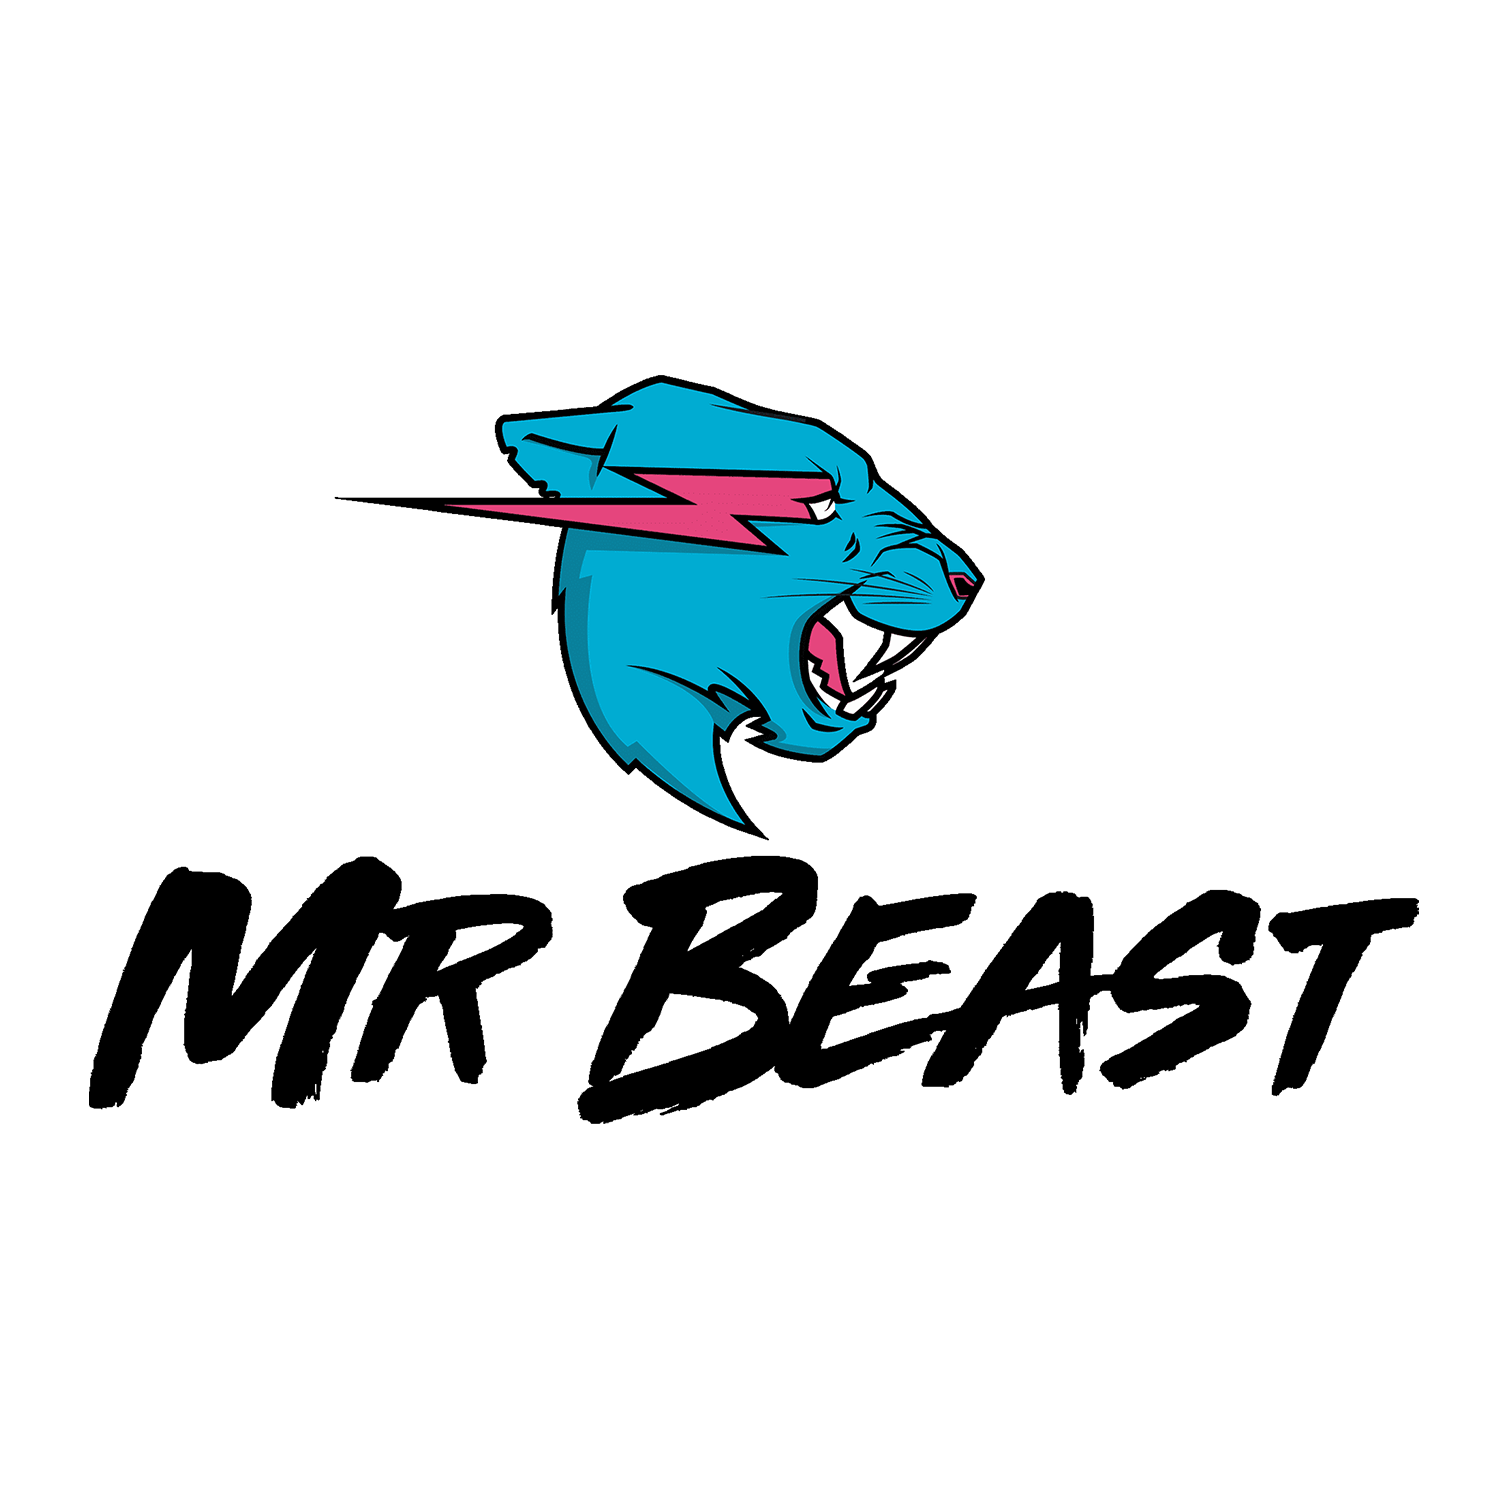 Мистер бист 1 час. Мистер Бист. Тигр Мистер Бист. Джимми MRBEAST. Логотип мистера биста.